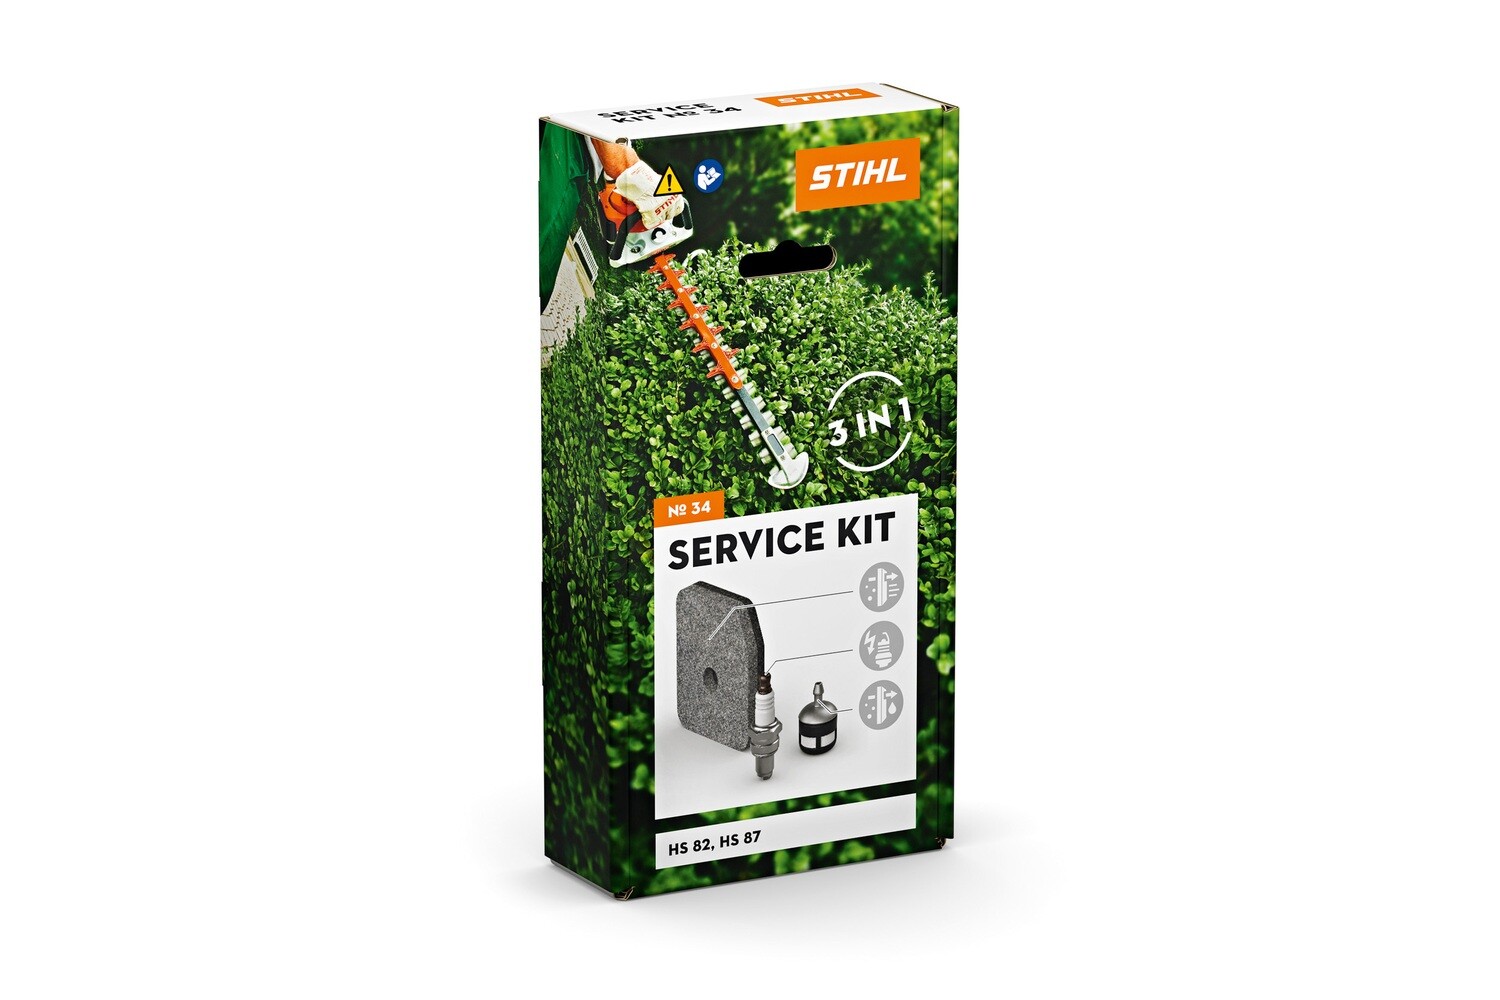 Stihl Hedge Trimmer Service Kit 34 For HS82 &amp; HS87: 4237-007-4100